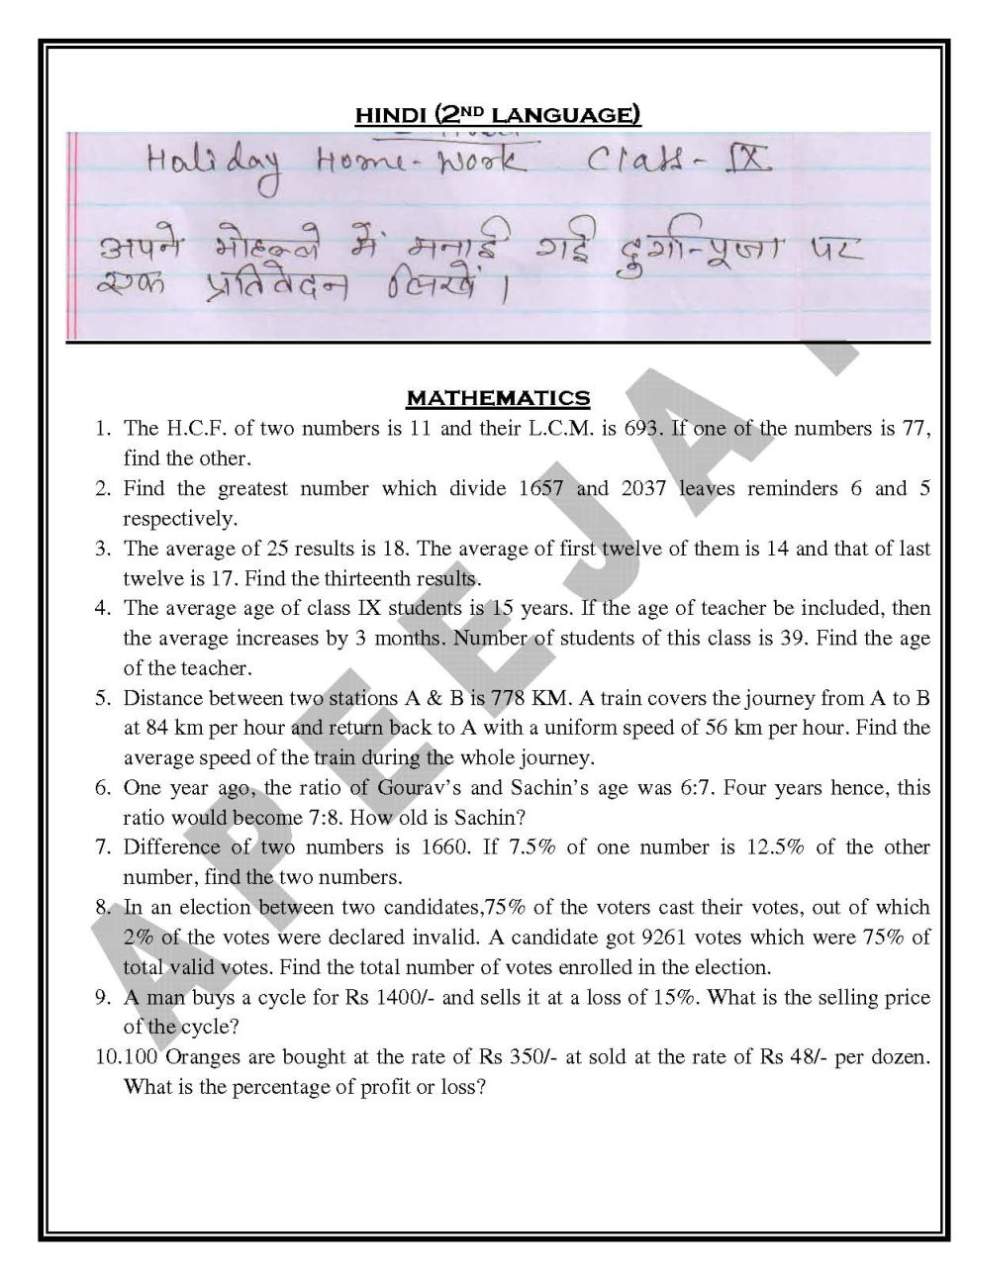 9th class holiday homework 2023 pdf